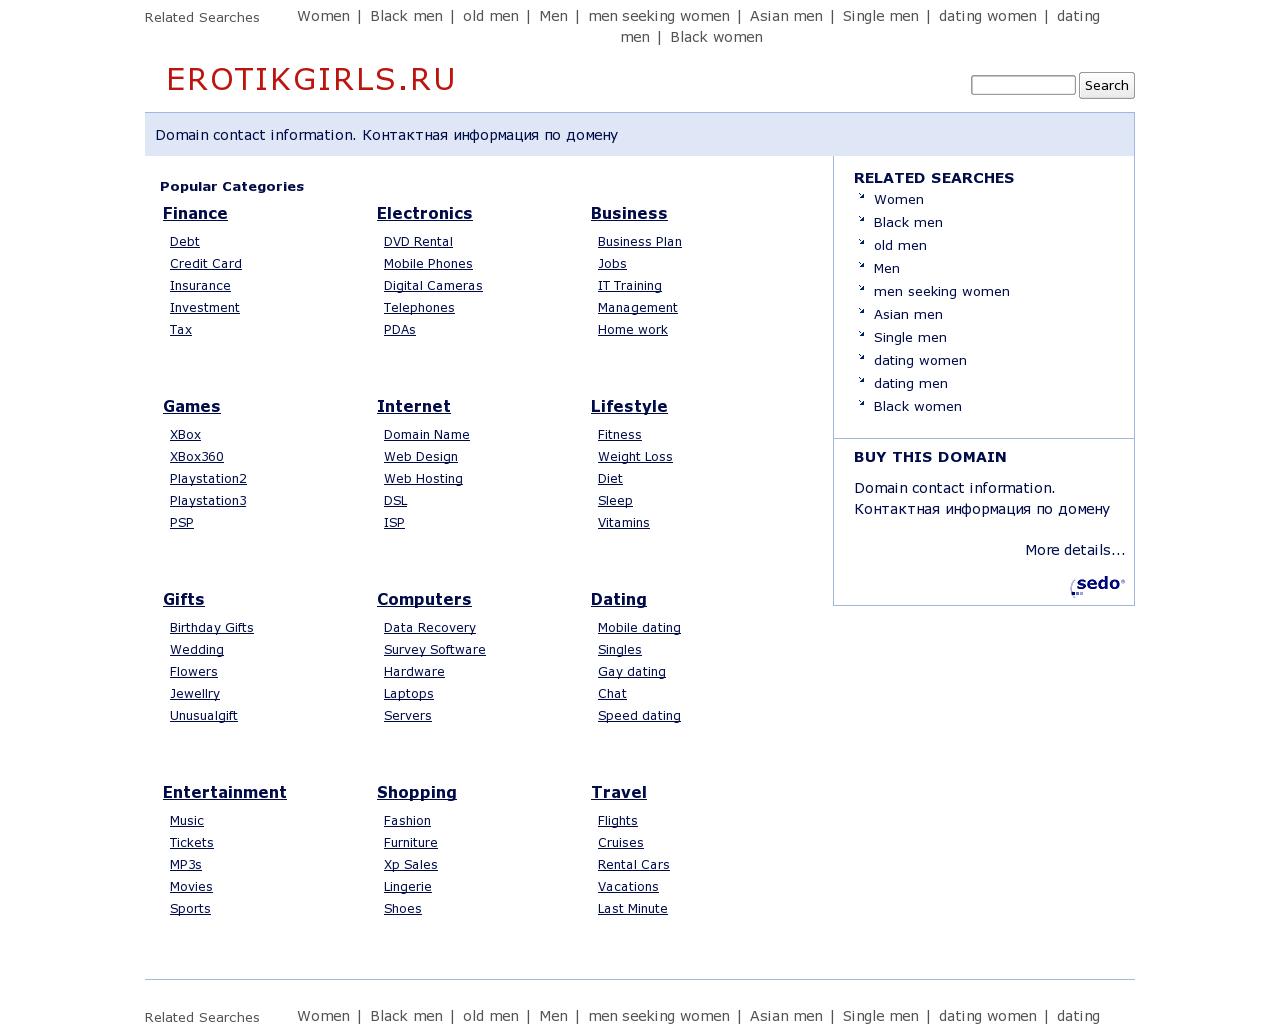 Изображение сайта erotikgirls.ru в разрешении 1280x1024